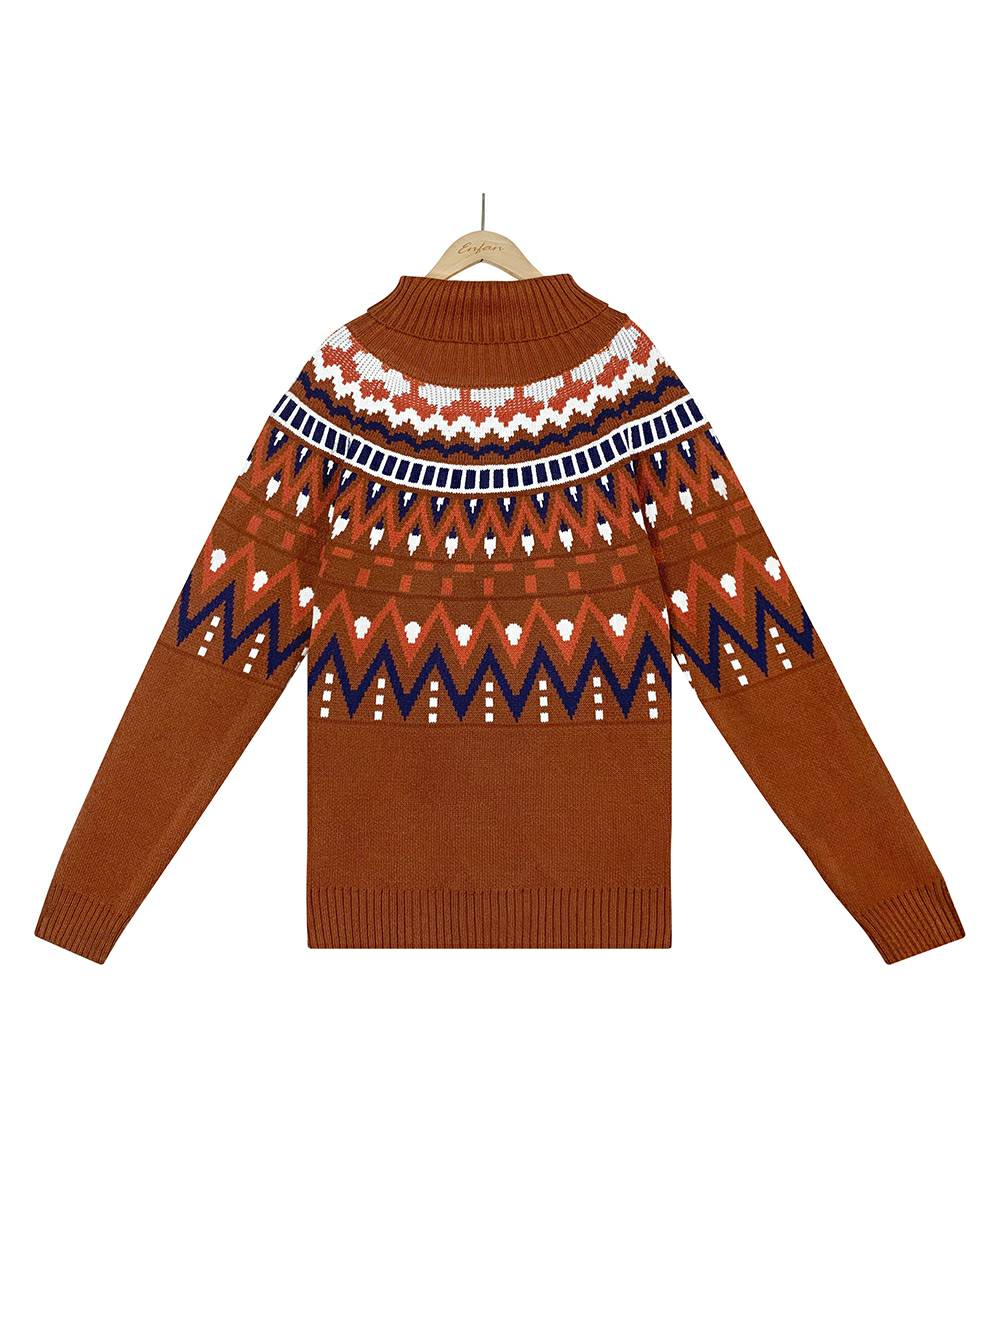 Suéter vintage listrado colorido com gola alta